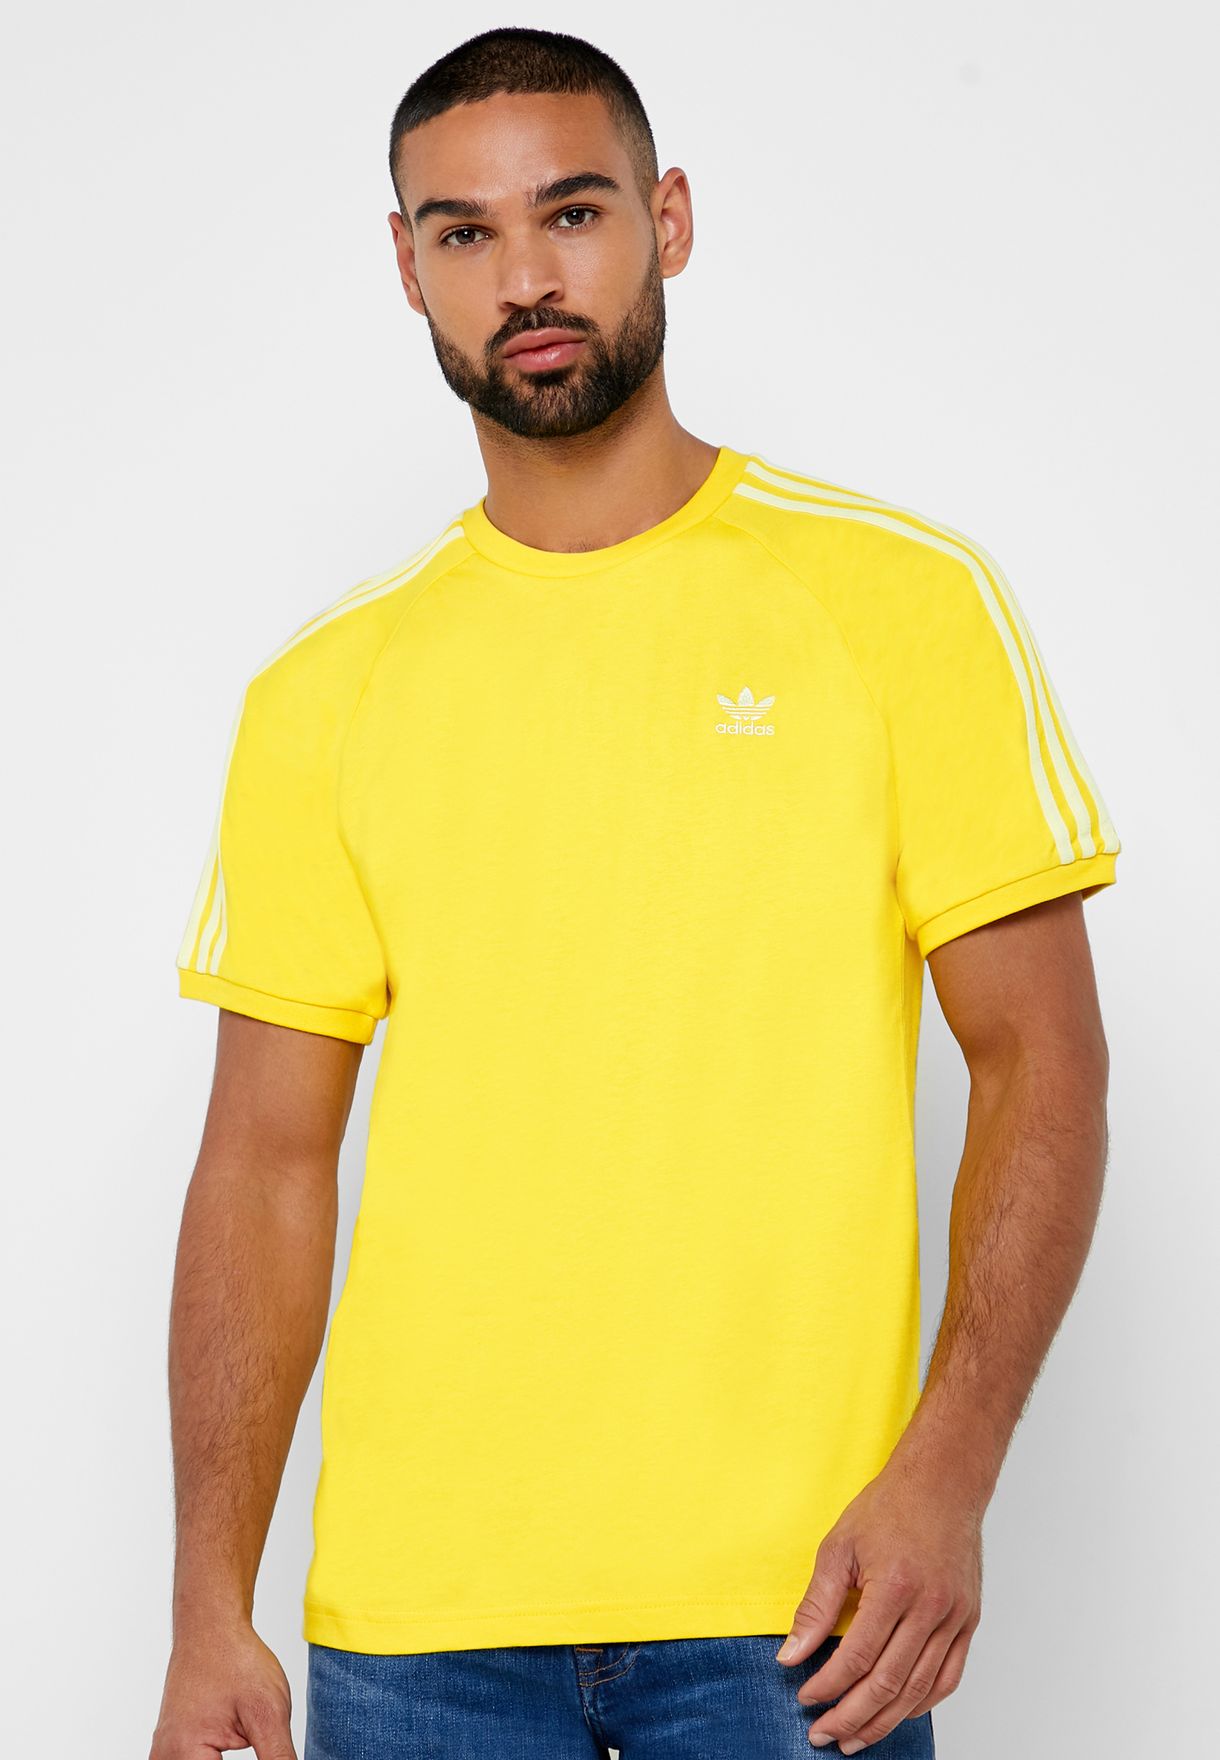 adidas originals t shirt yellow